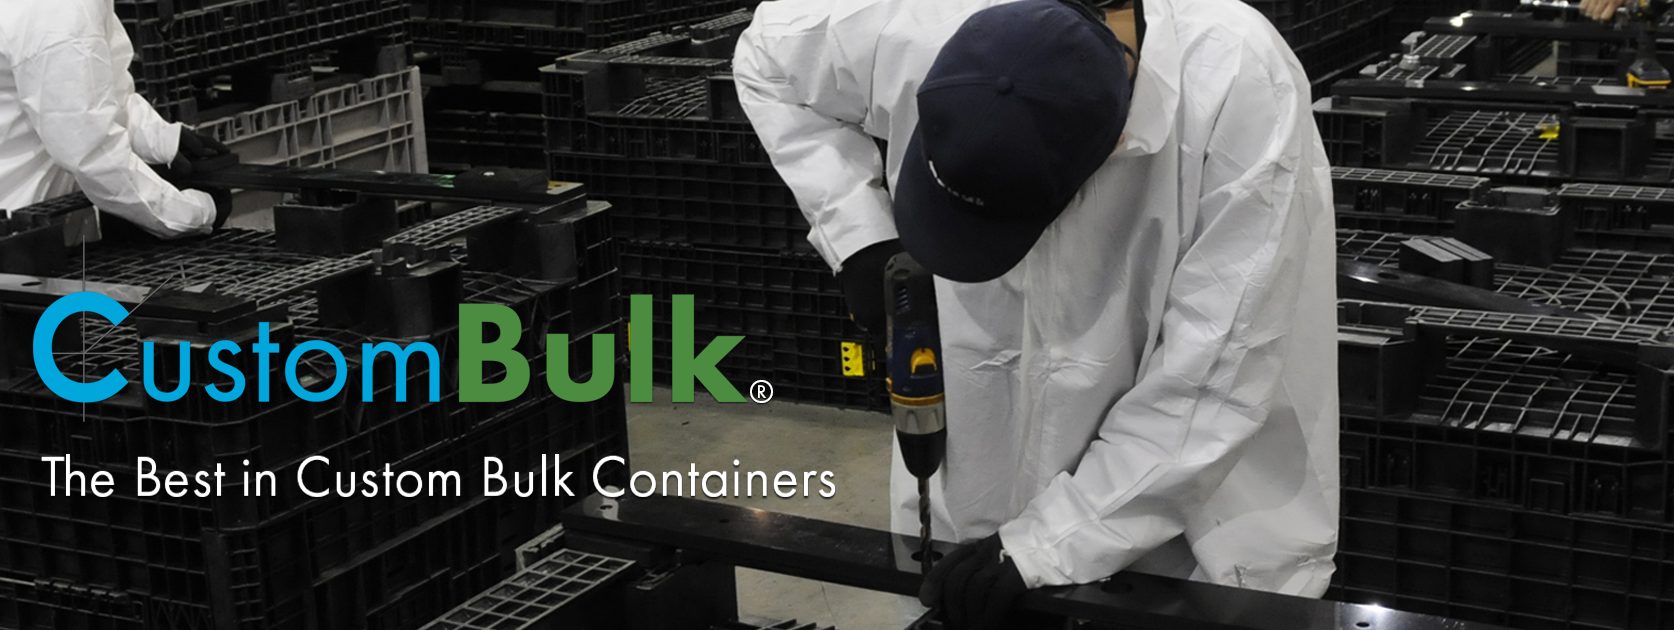 CustomBulk Custom Bulk Containers